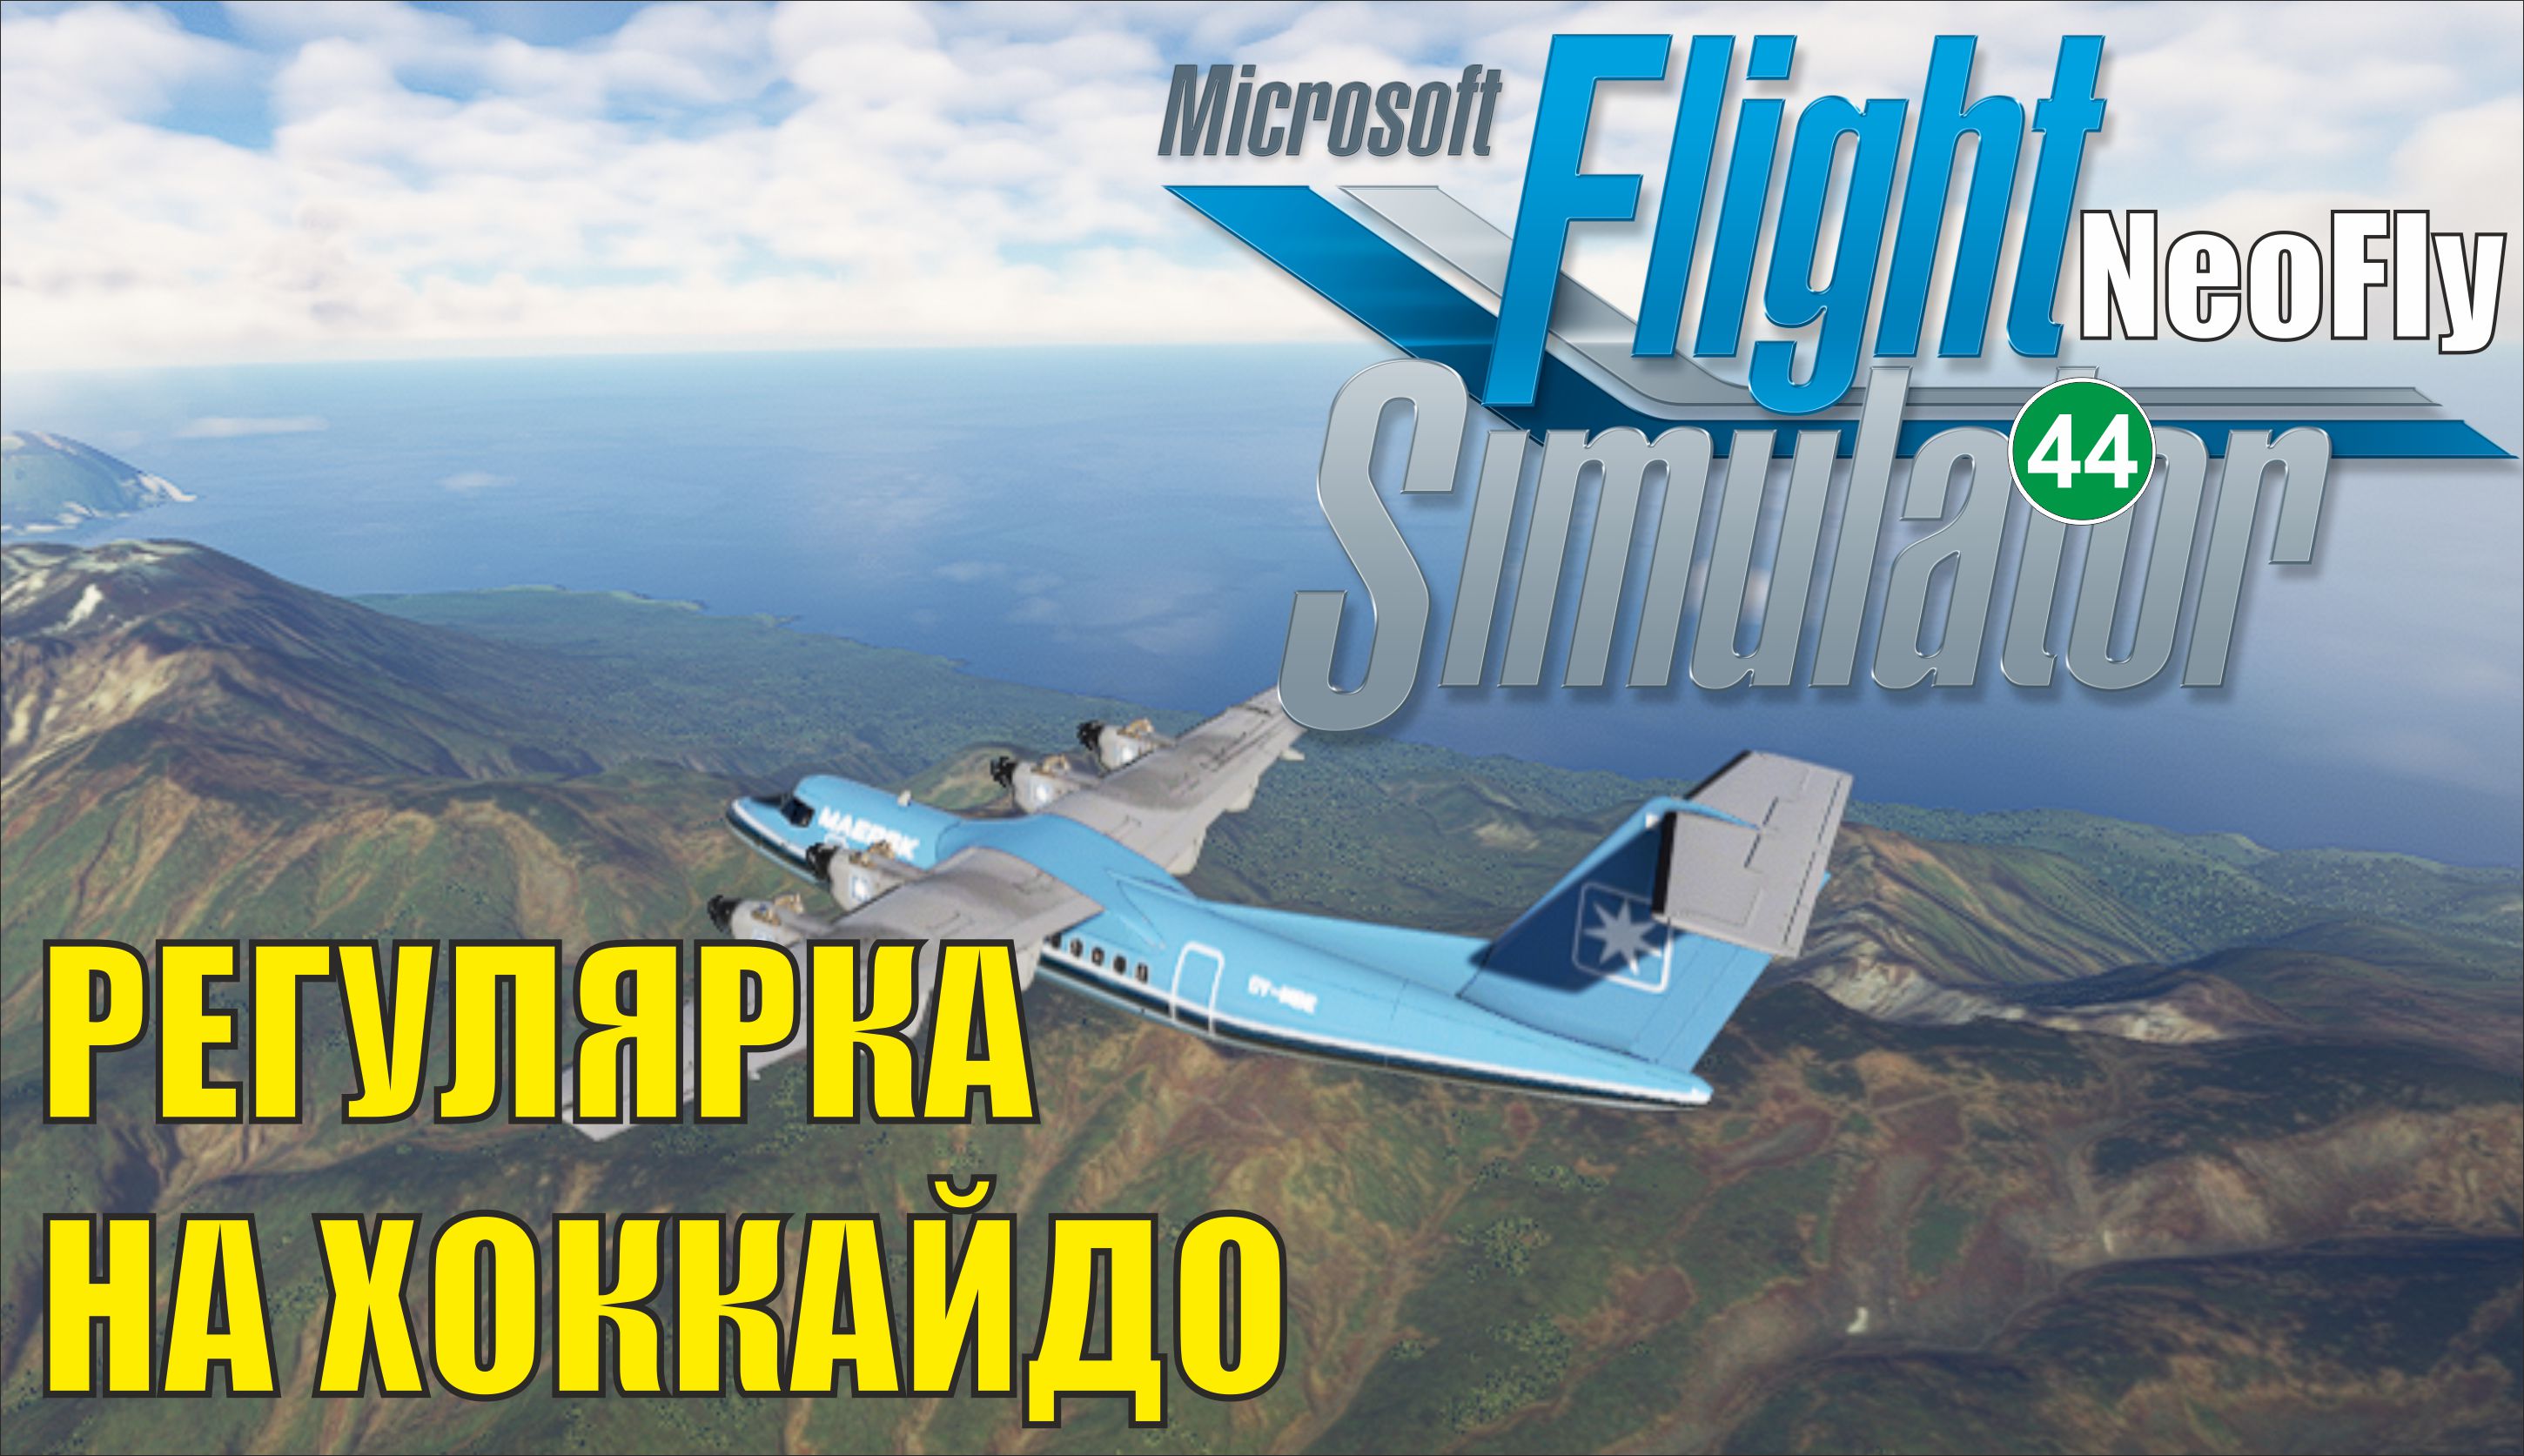 Microsoft Flight Simulator 2020 (NeoFly) - Регулярка на Хоккайдо